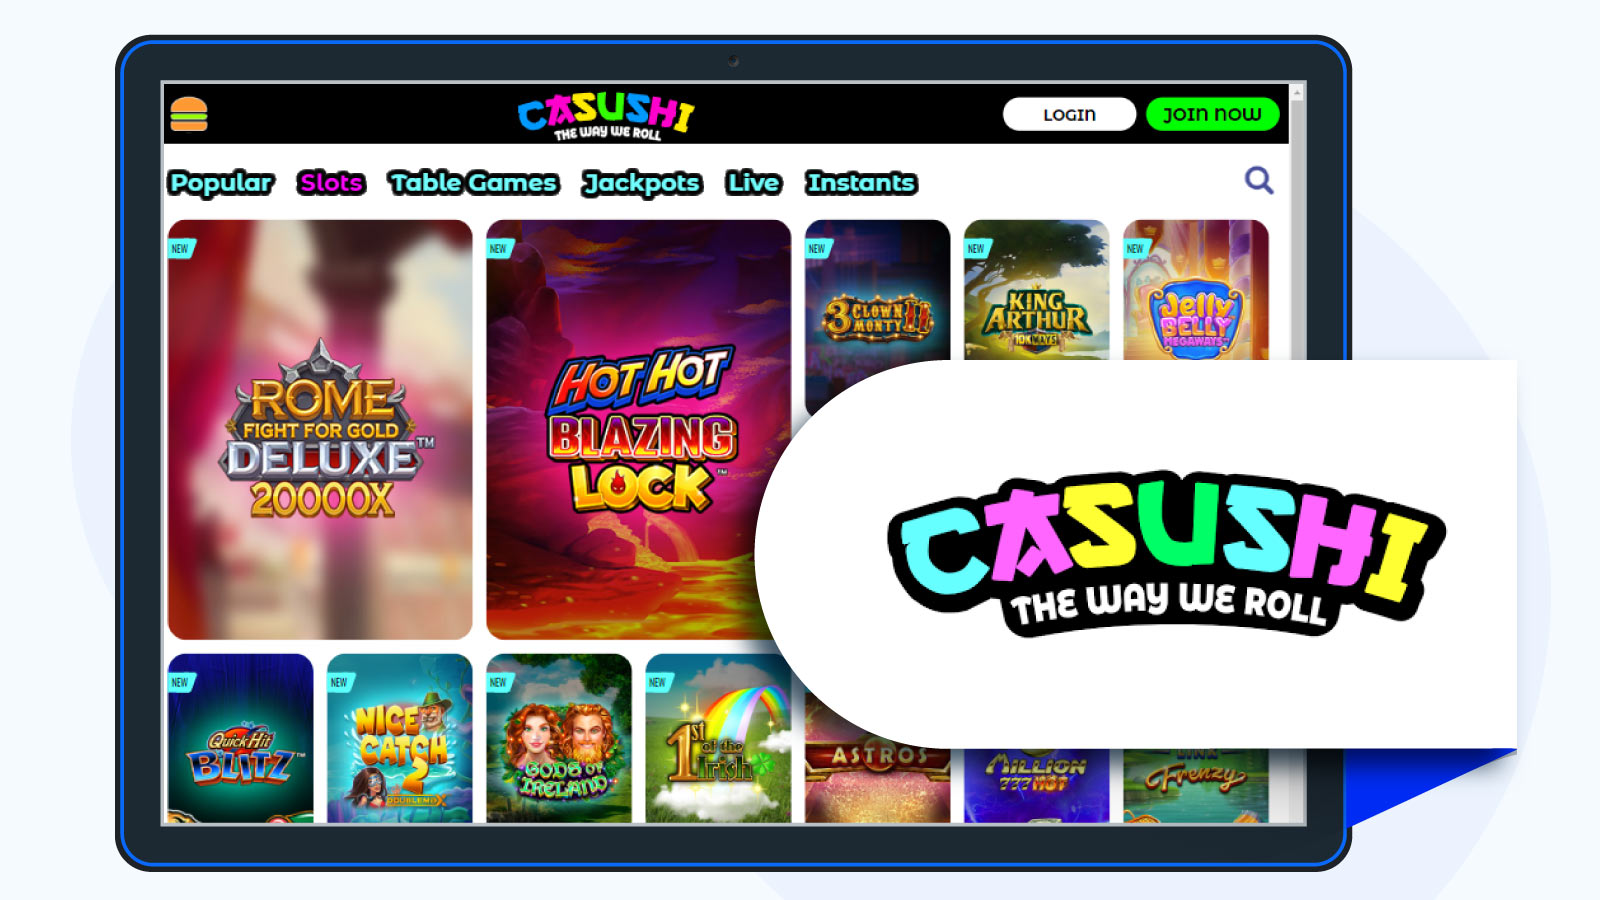 Casushi-Casino-UK-Player’s-Favorite